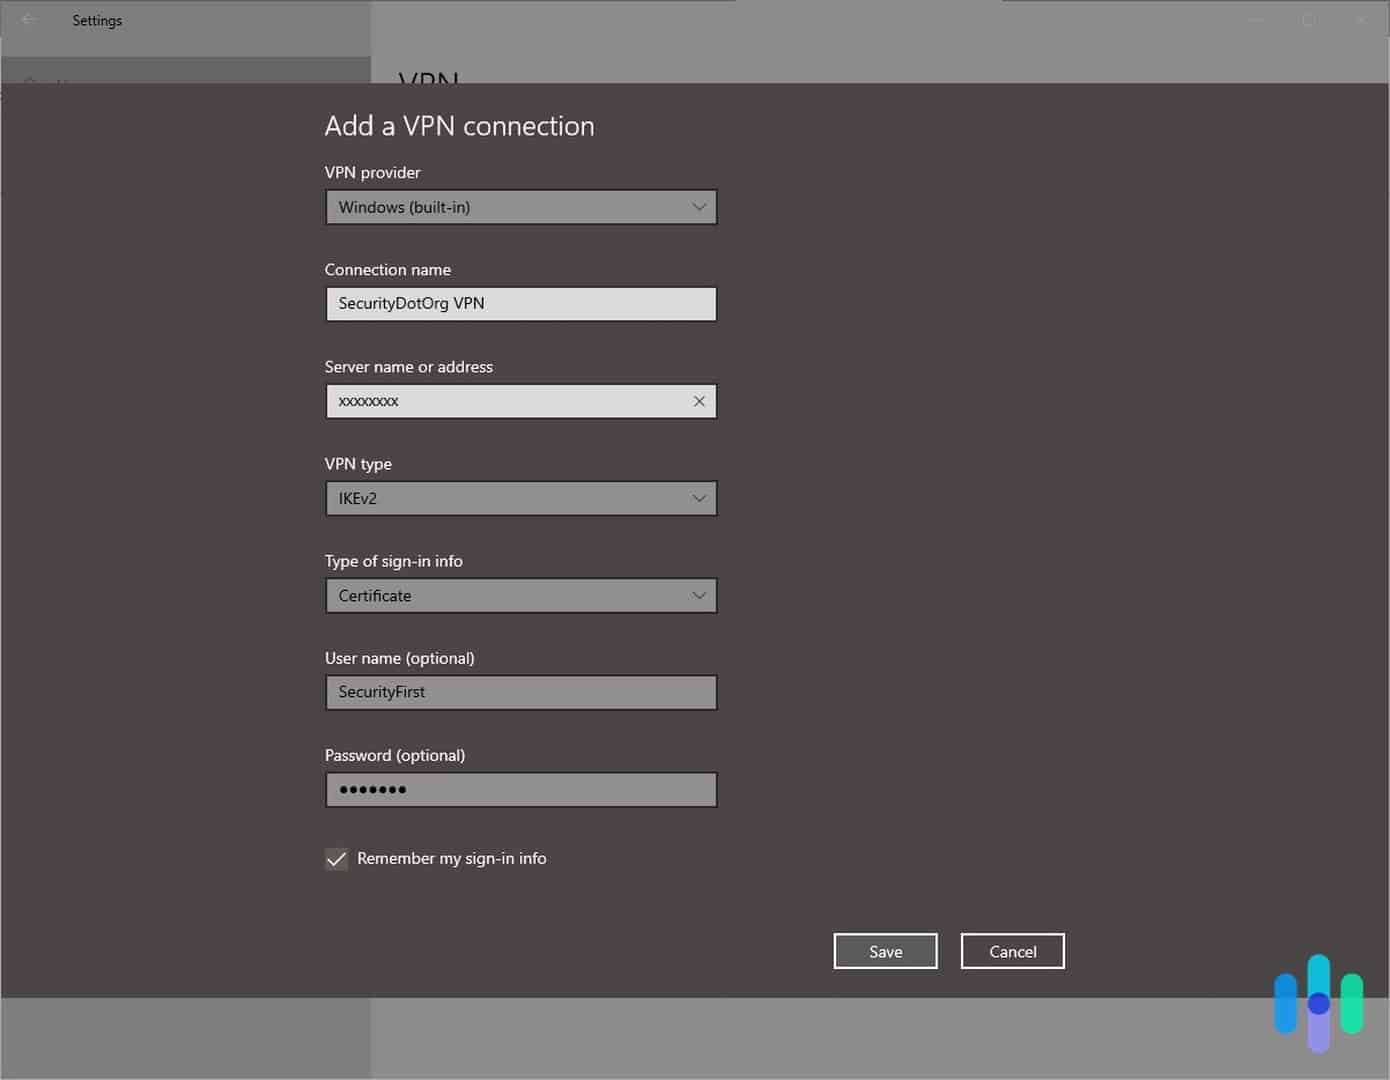 Windows 10’s built-in VPN configuration settings